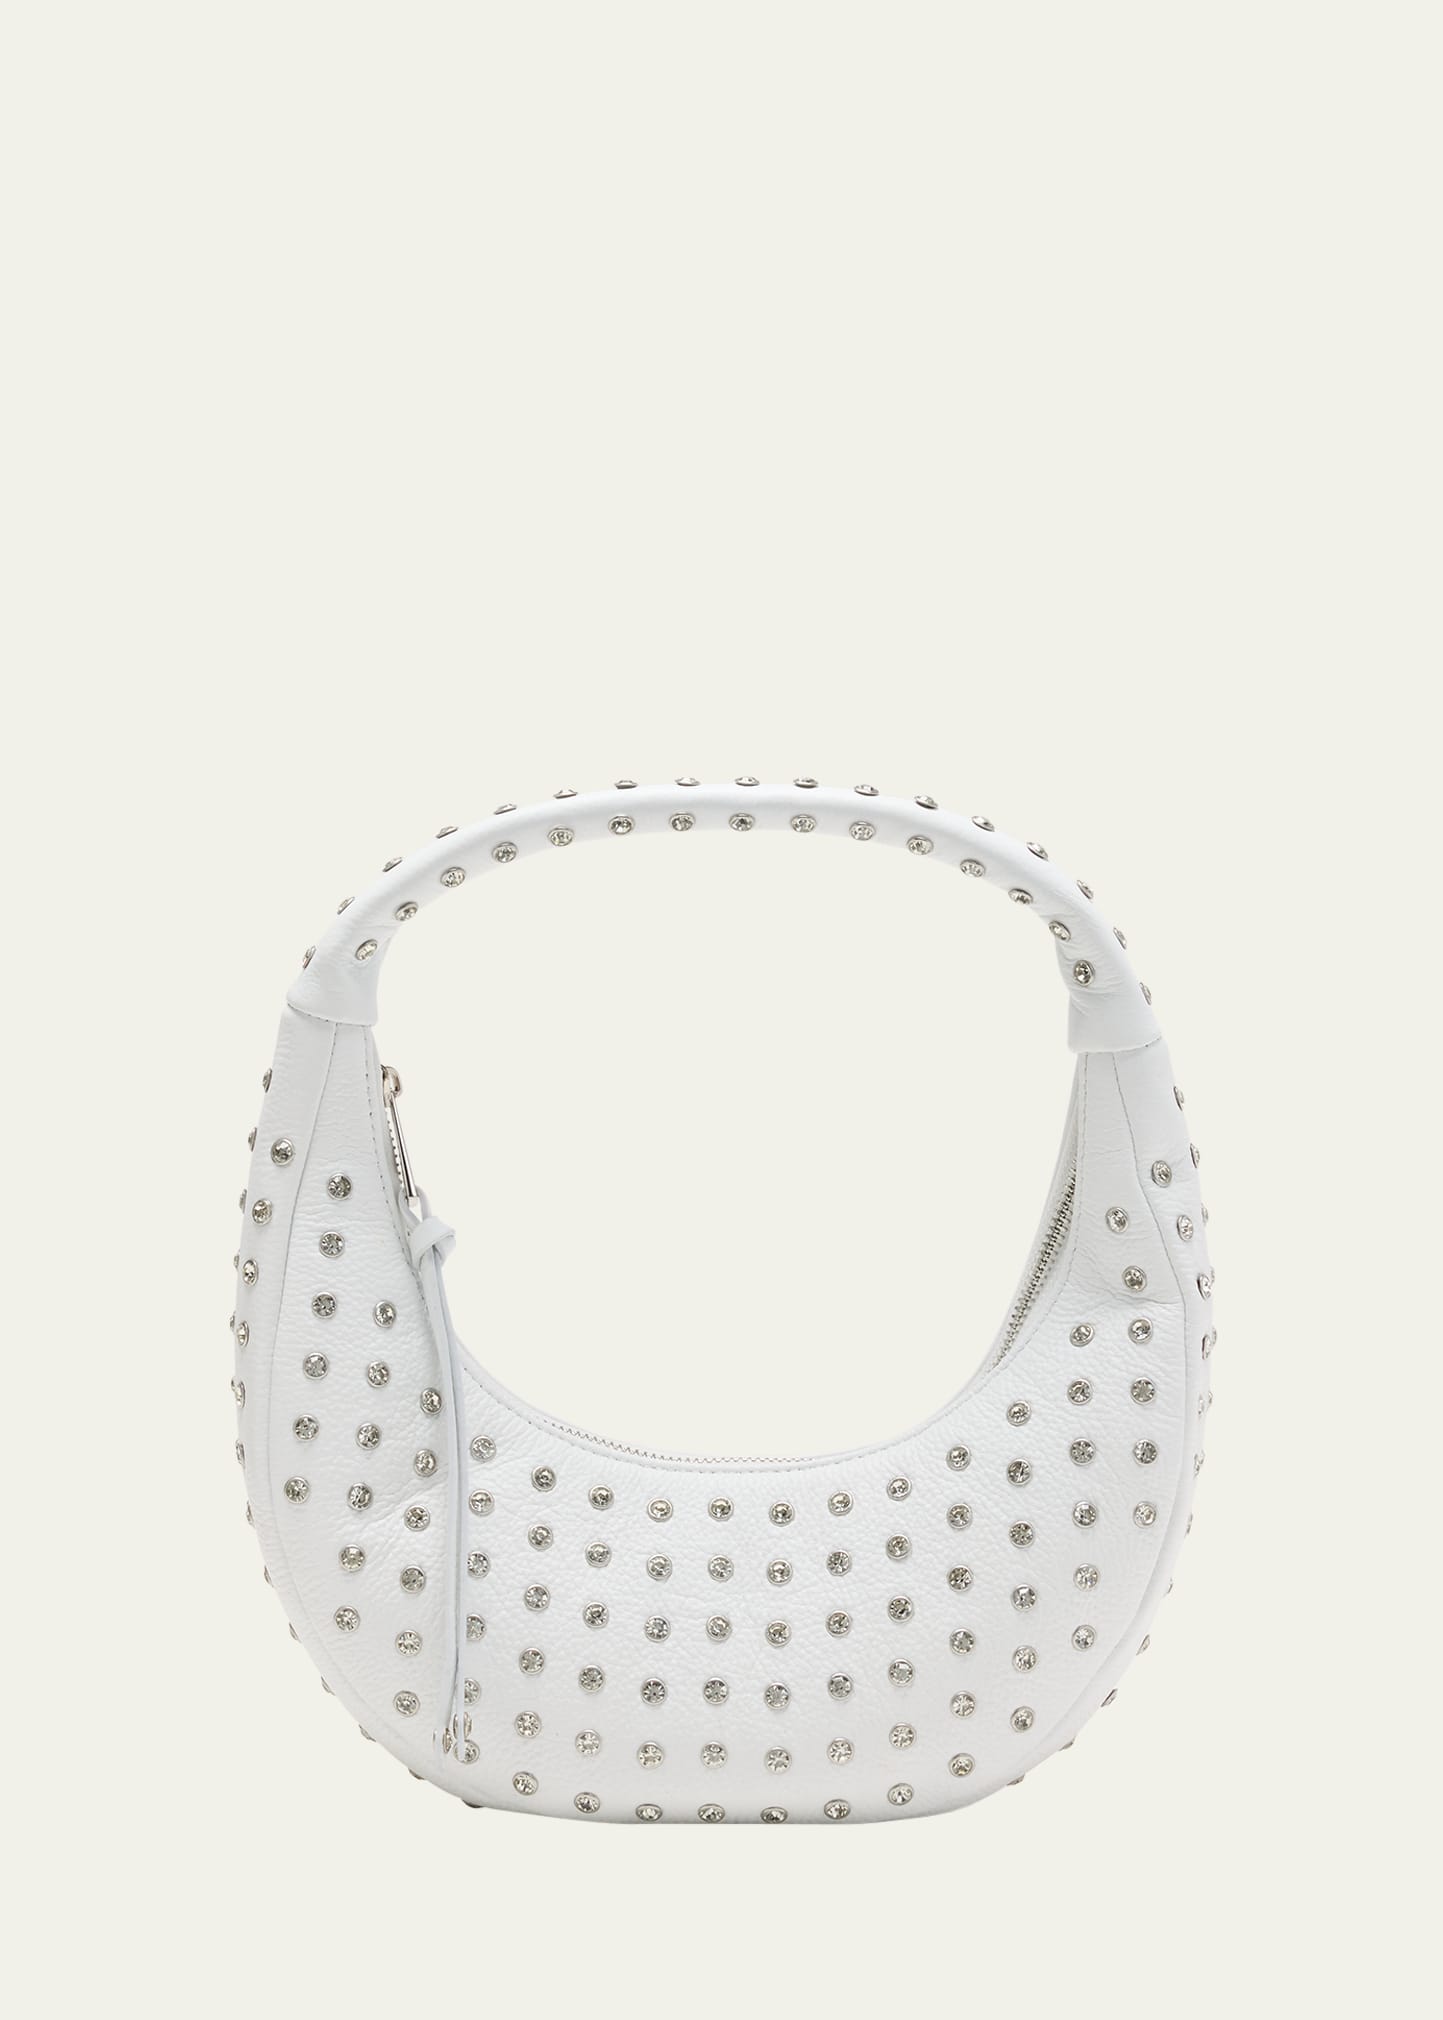 Retroféte Elodie Medium Embellished Top-handle Bag In White